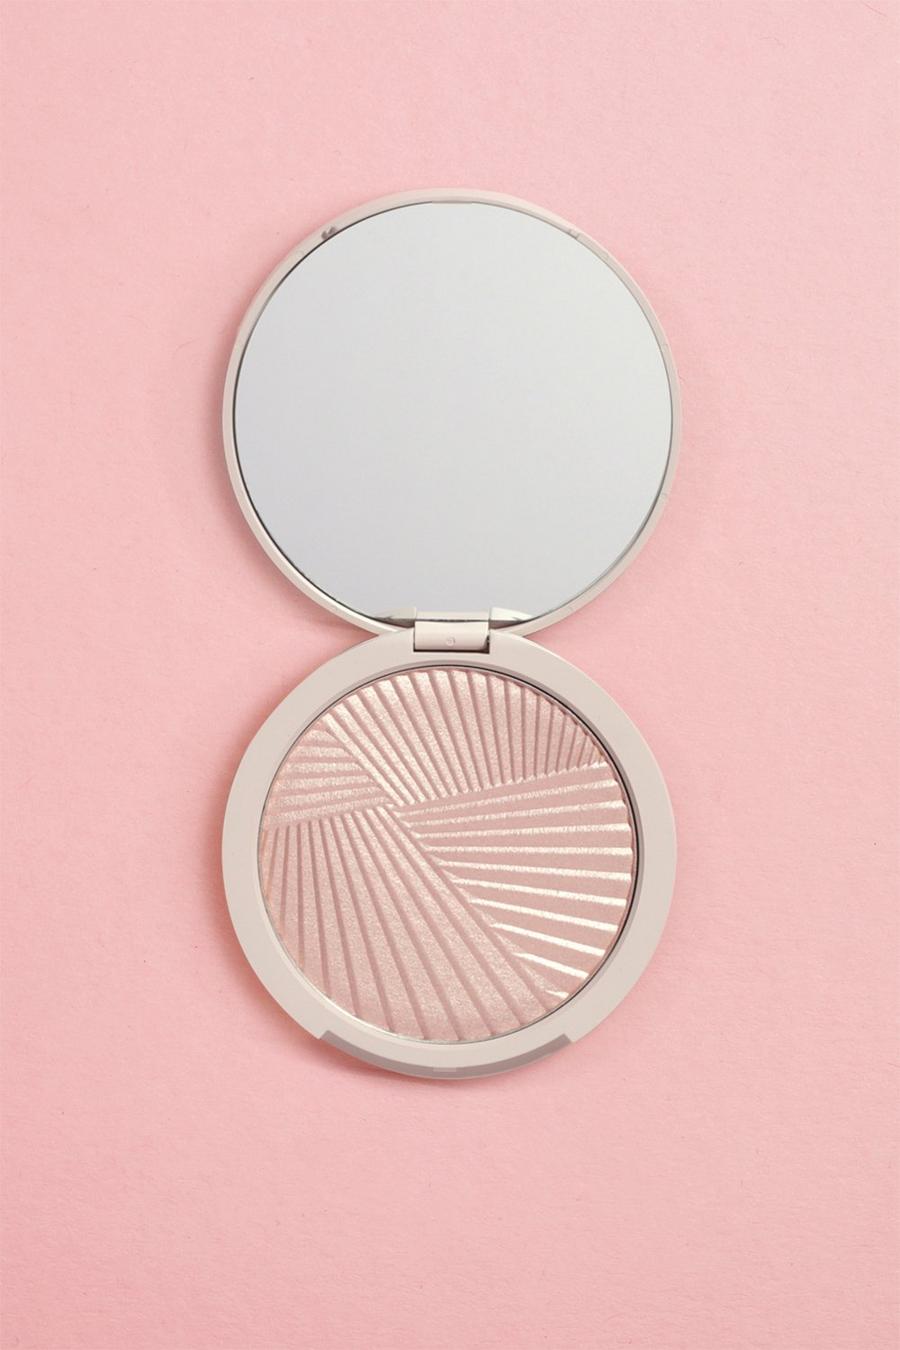 Pink rose Face & Body Highlighter Powder Mirror